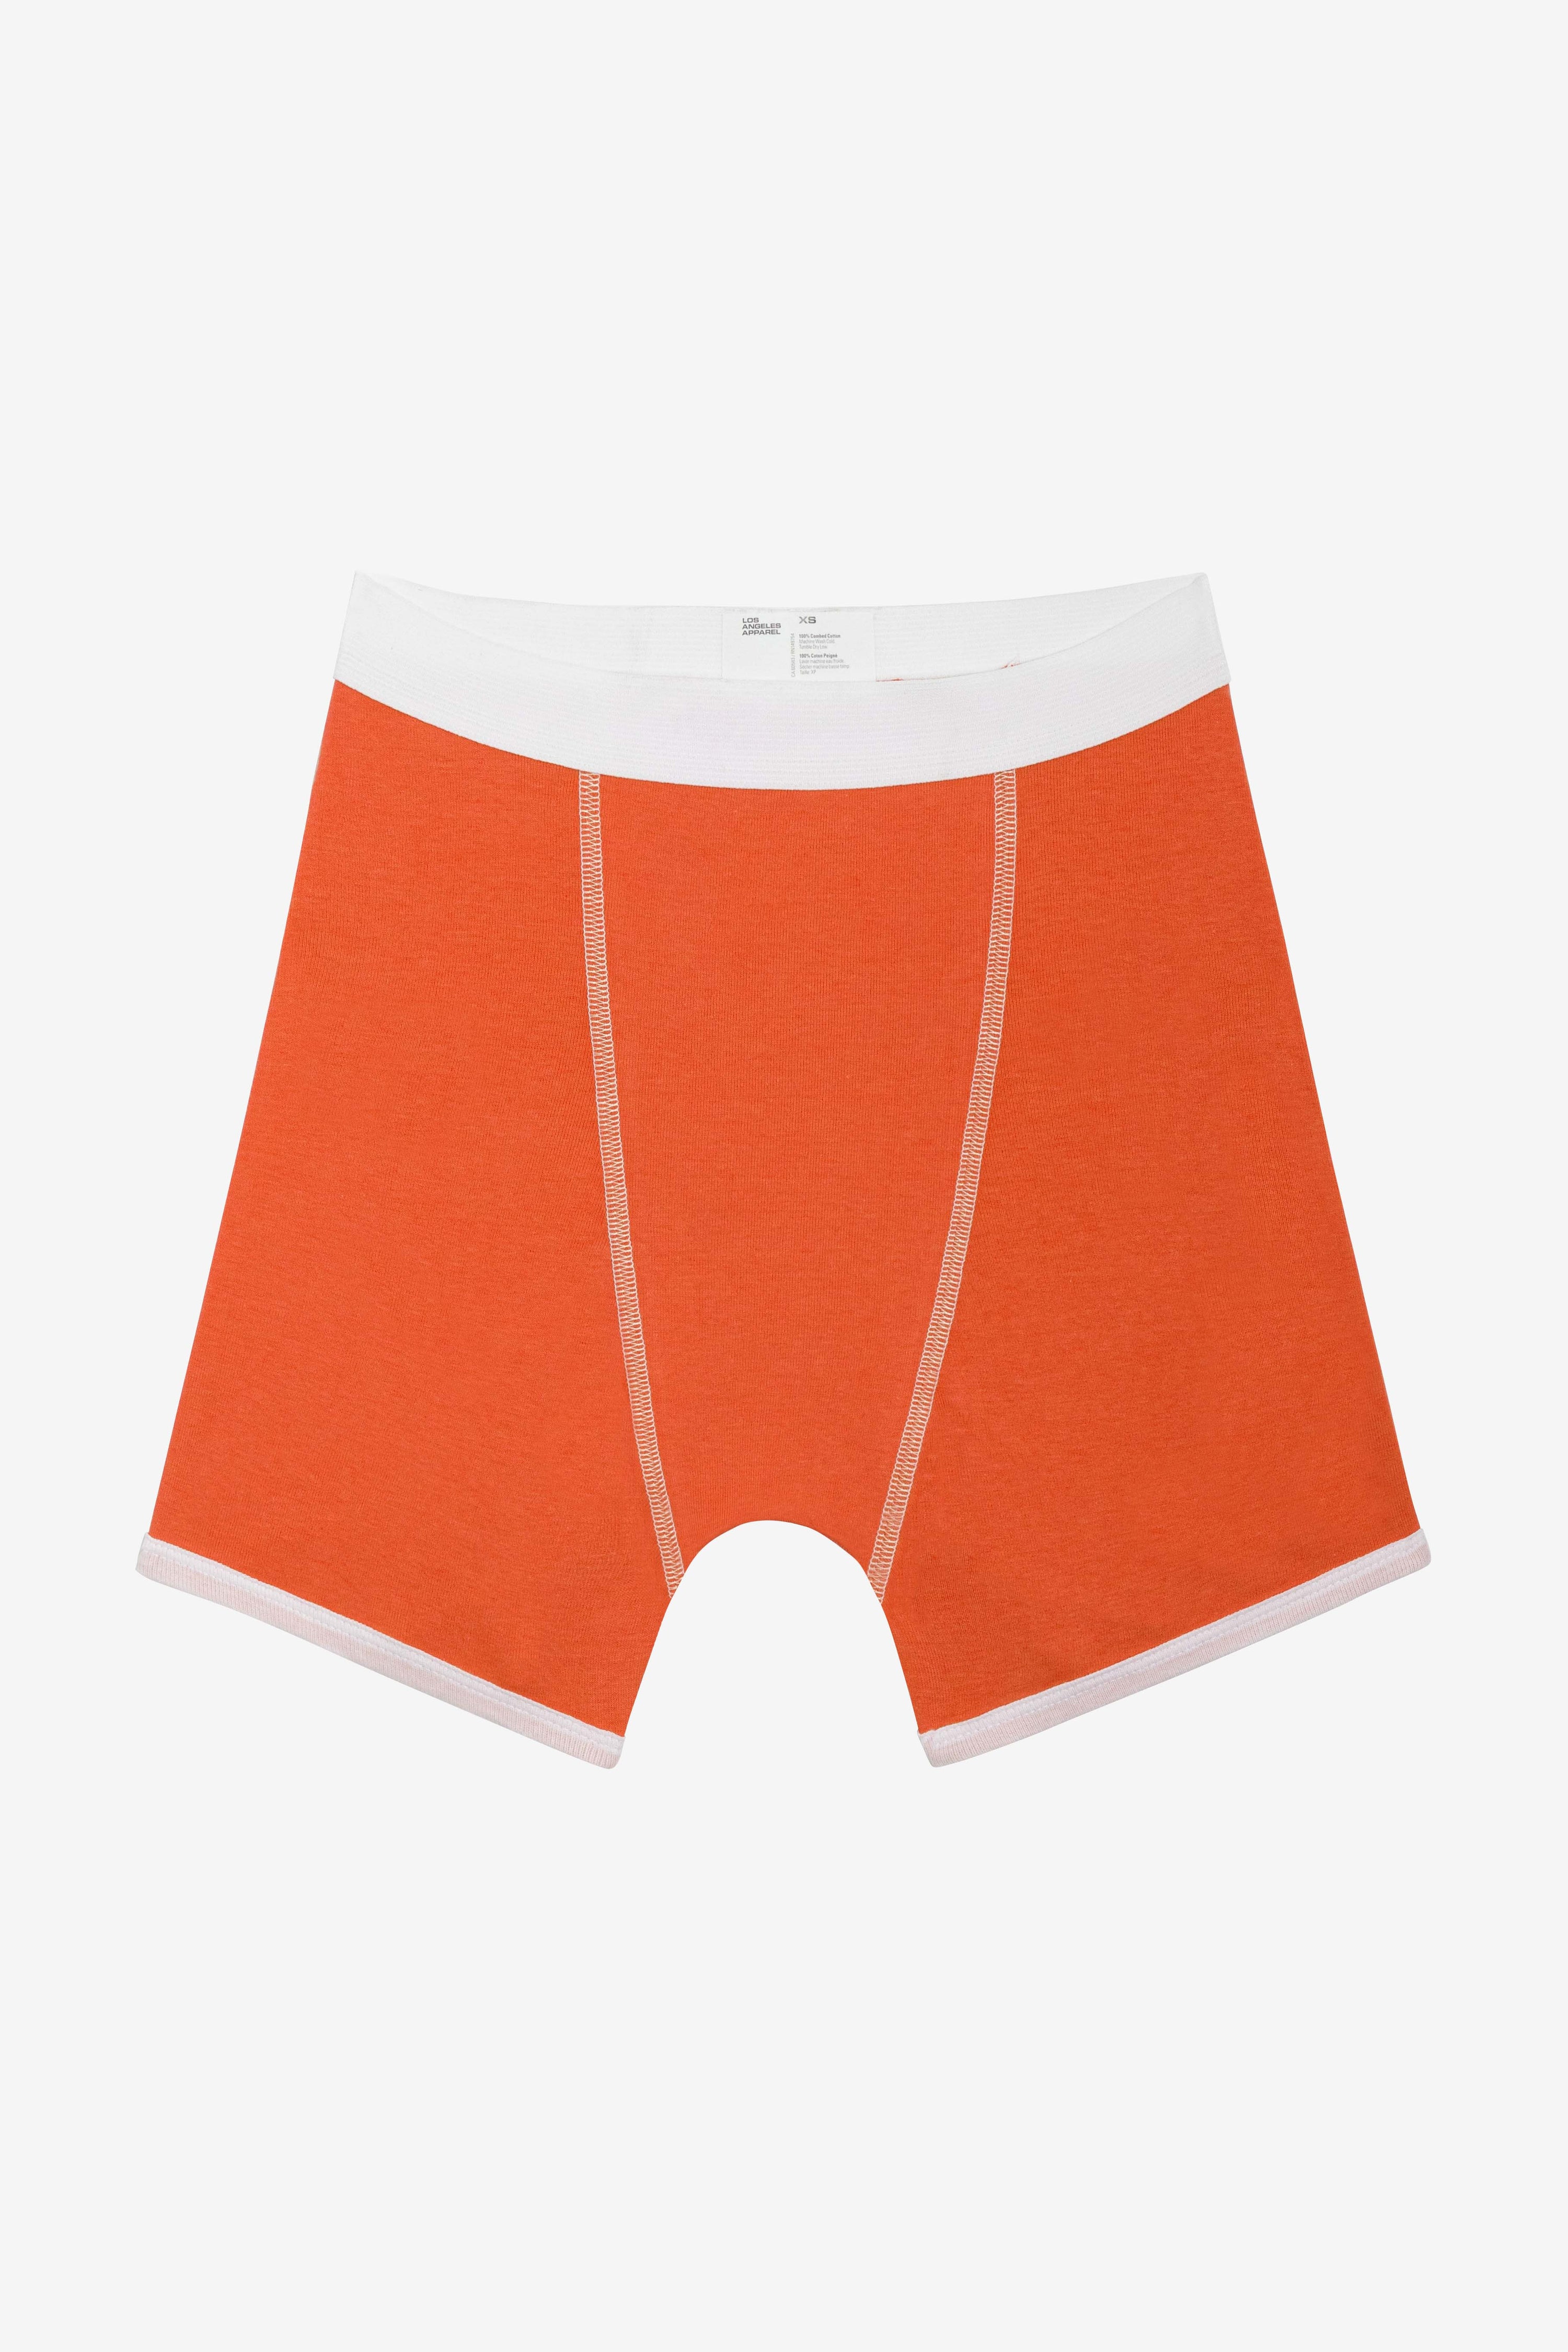  Orange - Men's Boxer Briefs / Men's Underwear: Clothing, Shoes &  Accessories